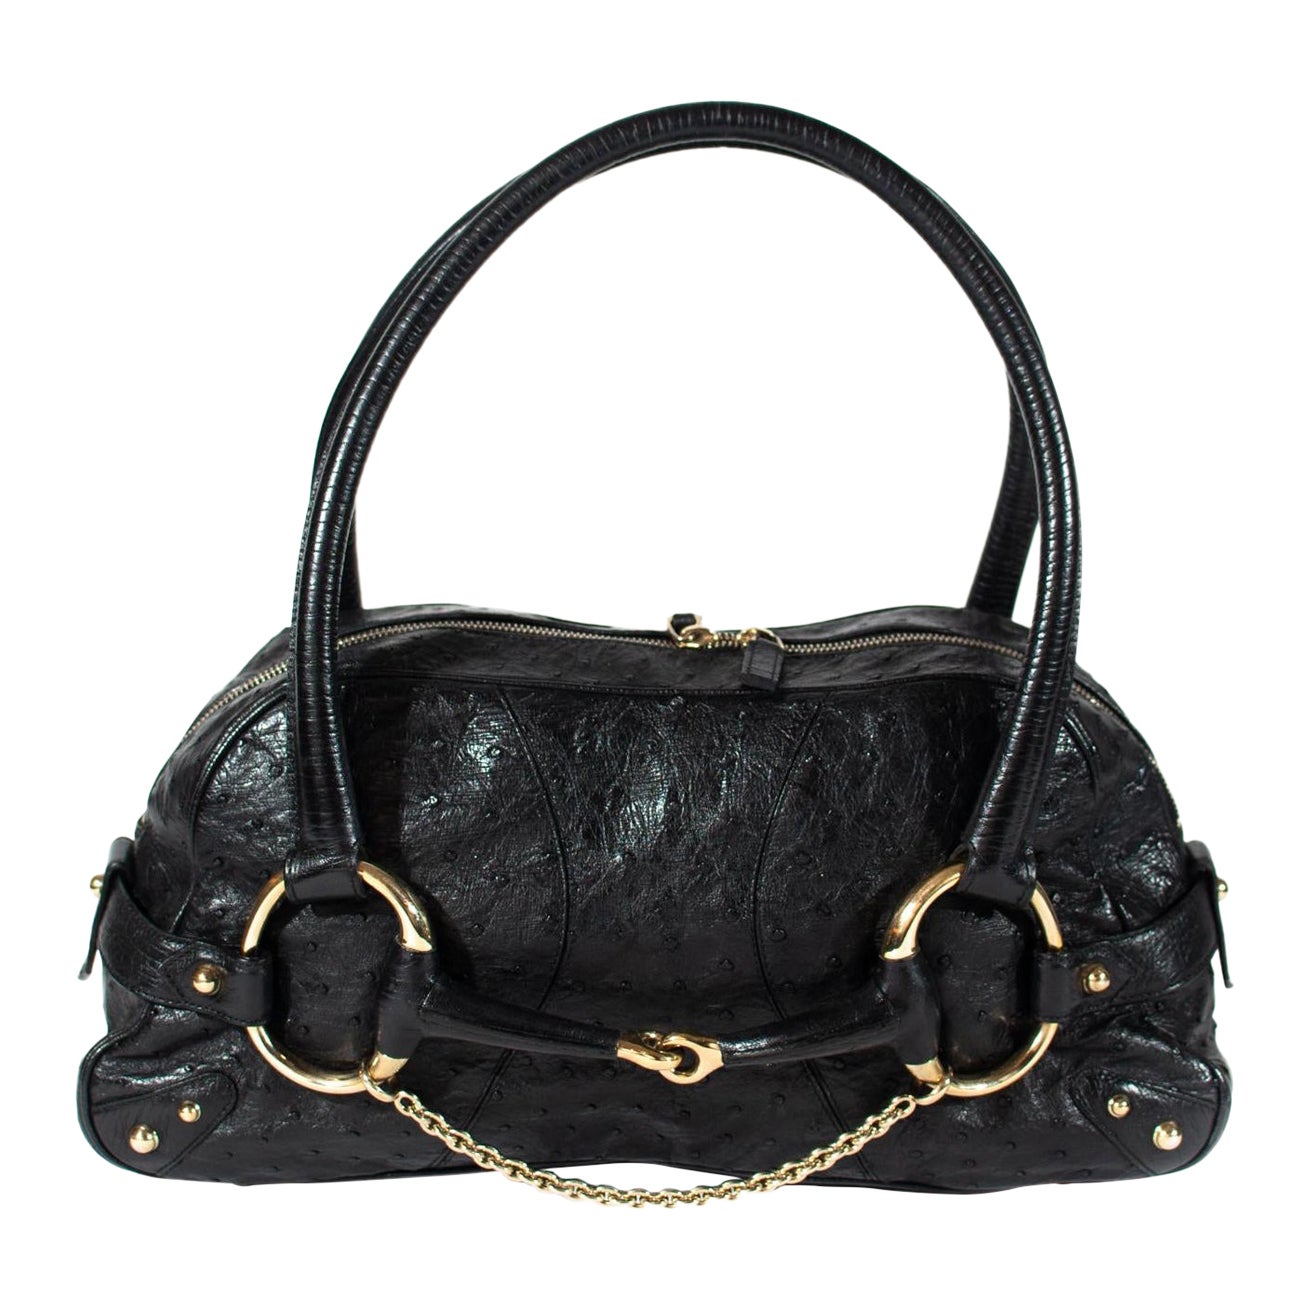 Gucci by Tom Ford Black Ostrich Leather Horsebit Oversized Shoulder Bag